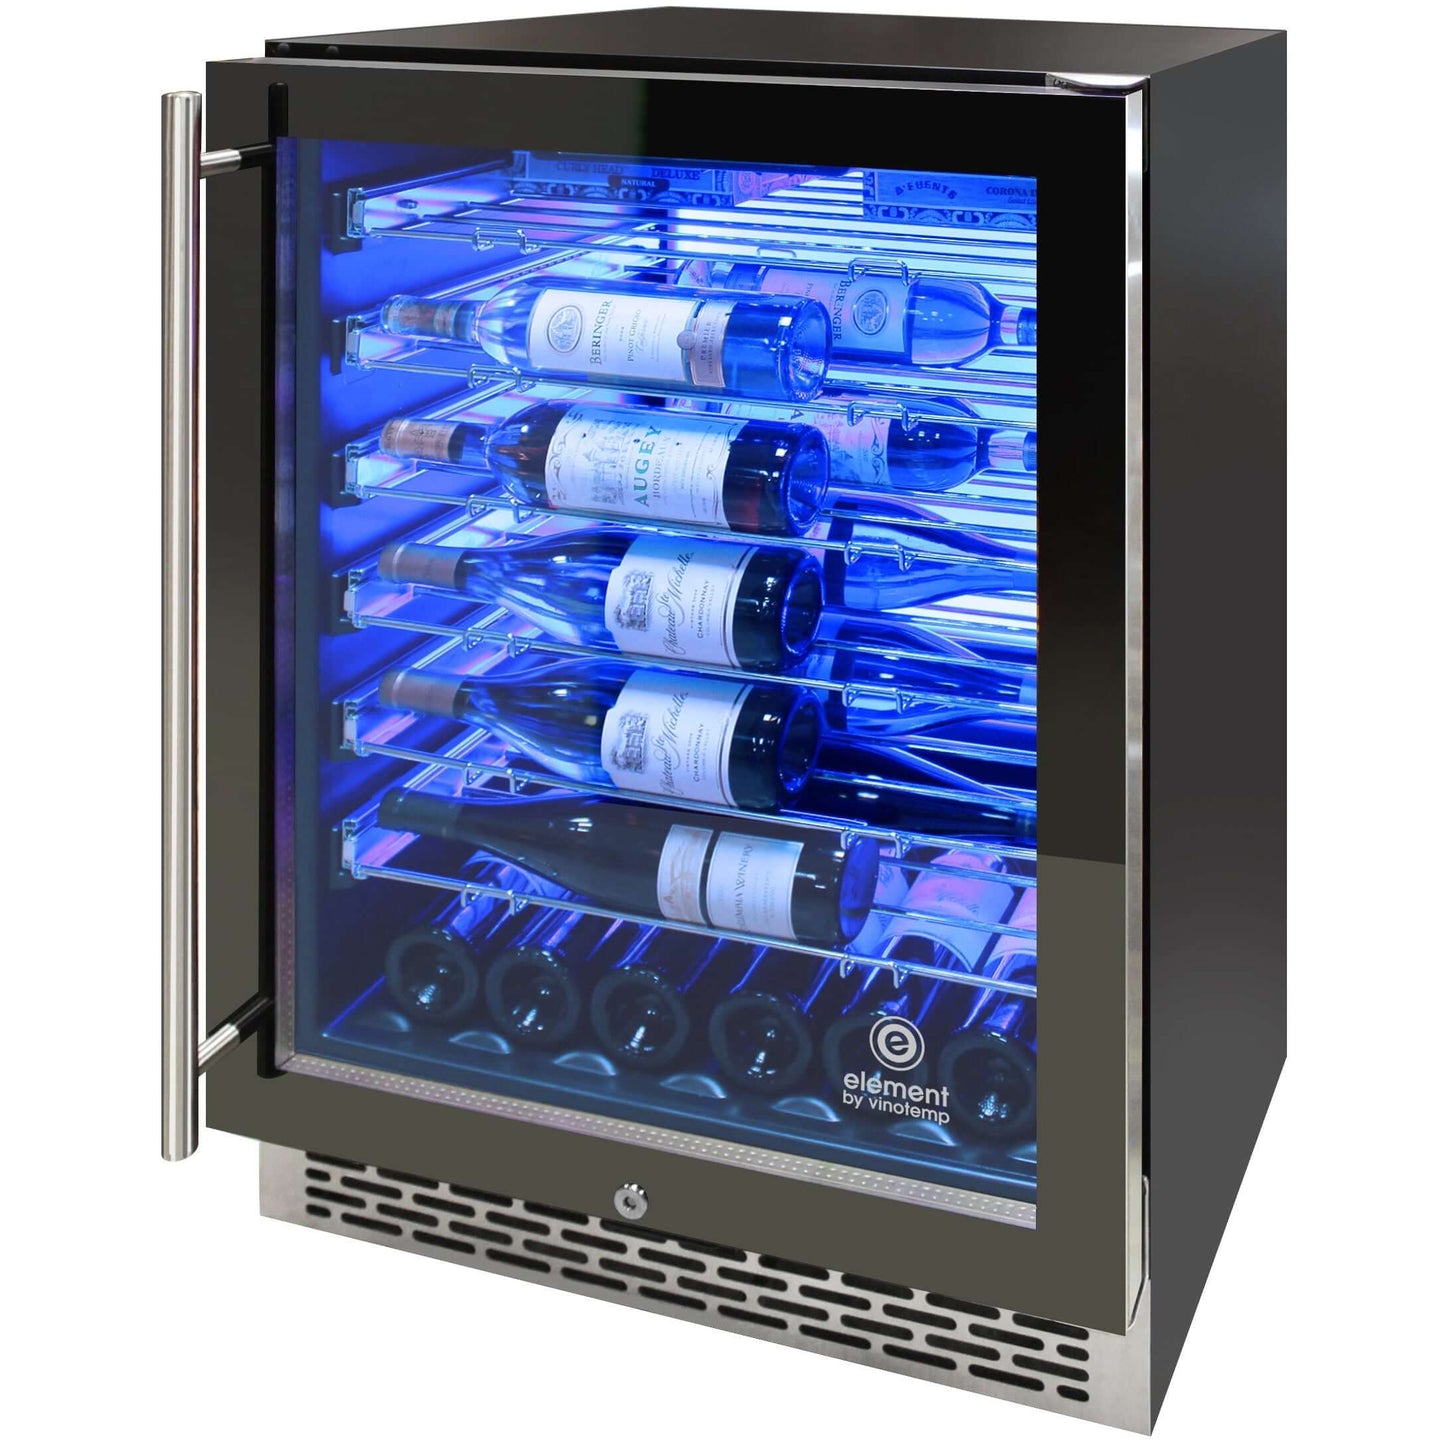 Vinotemp Private Reserve Series 41-Bottle Backlit Panel Commercial 54 Single-Zone Wine Cooler